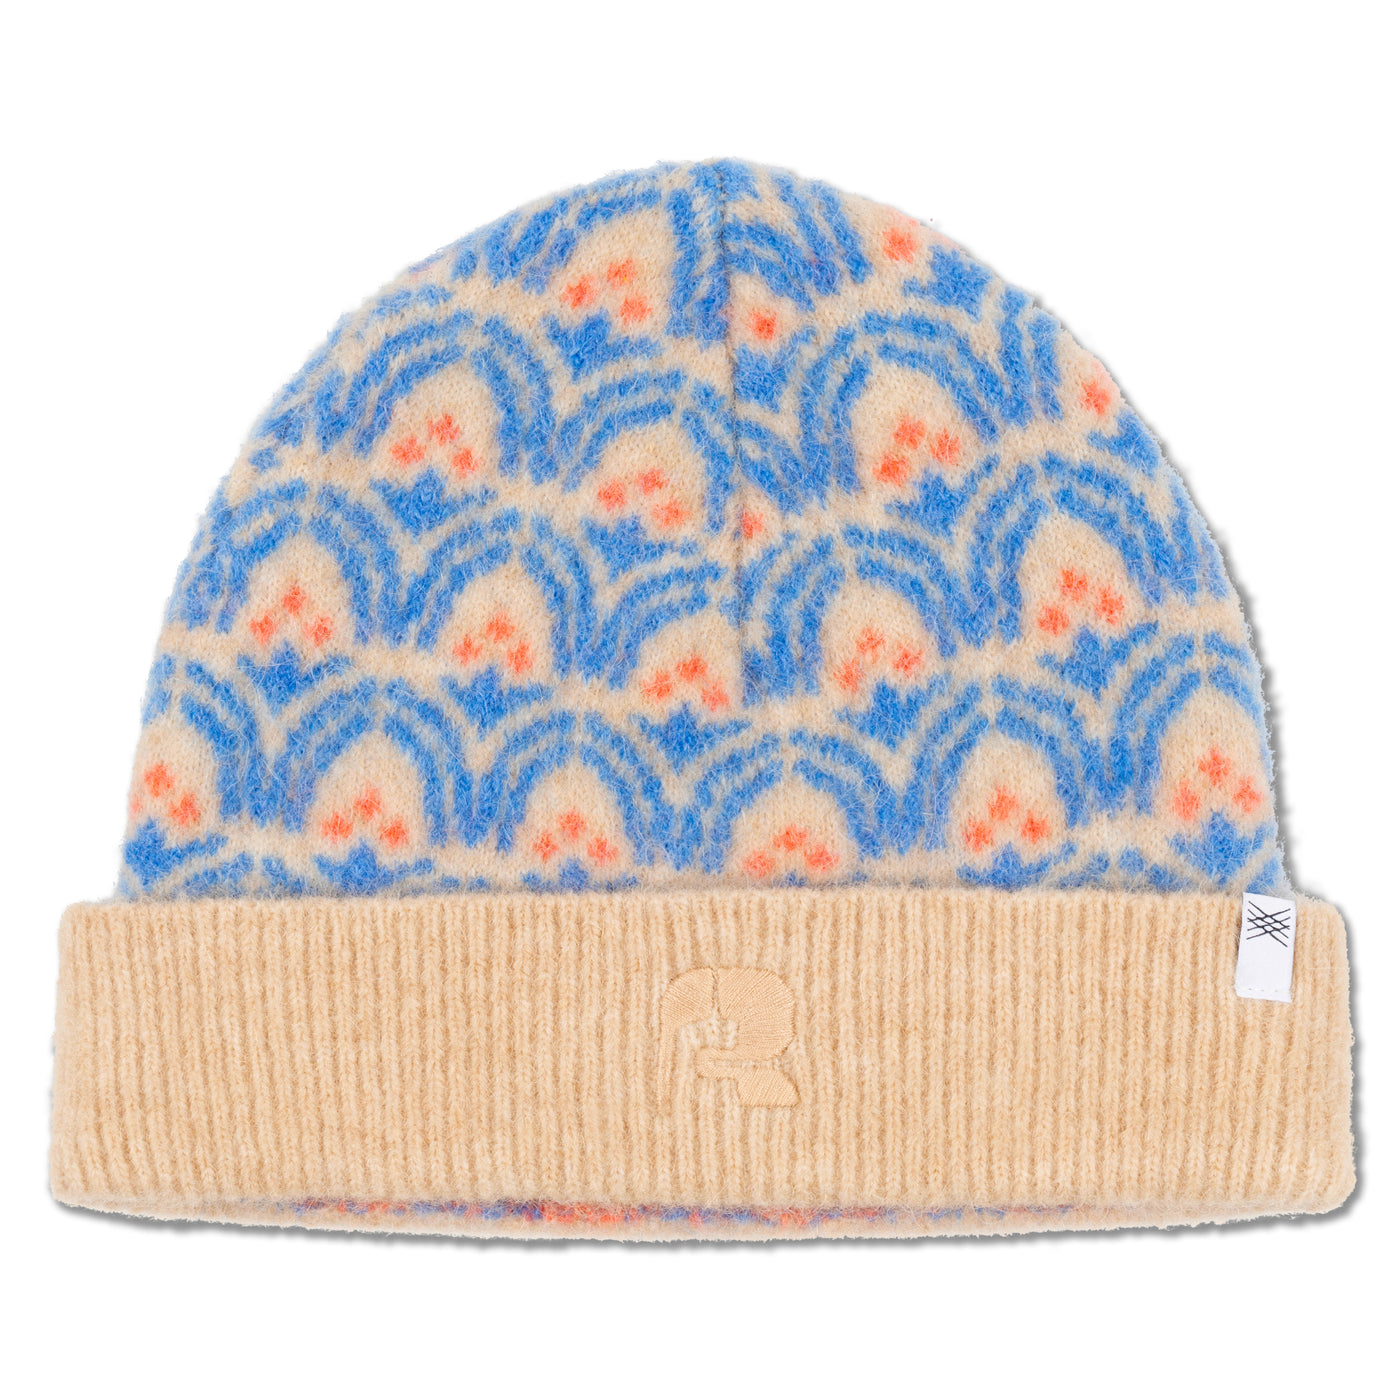 knit hat - arch jacquard